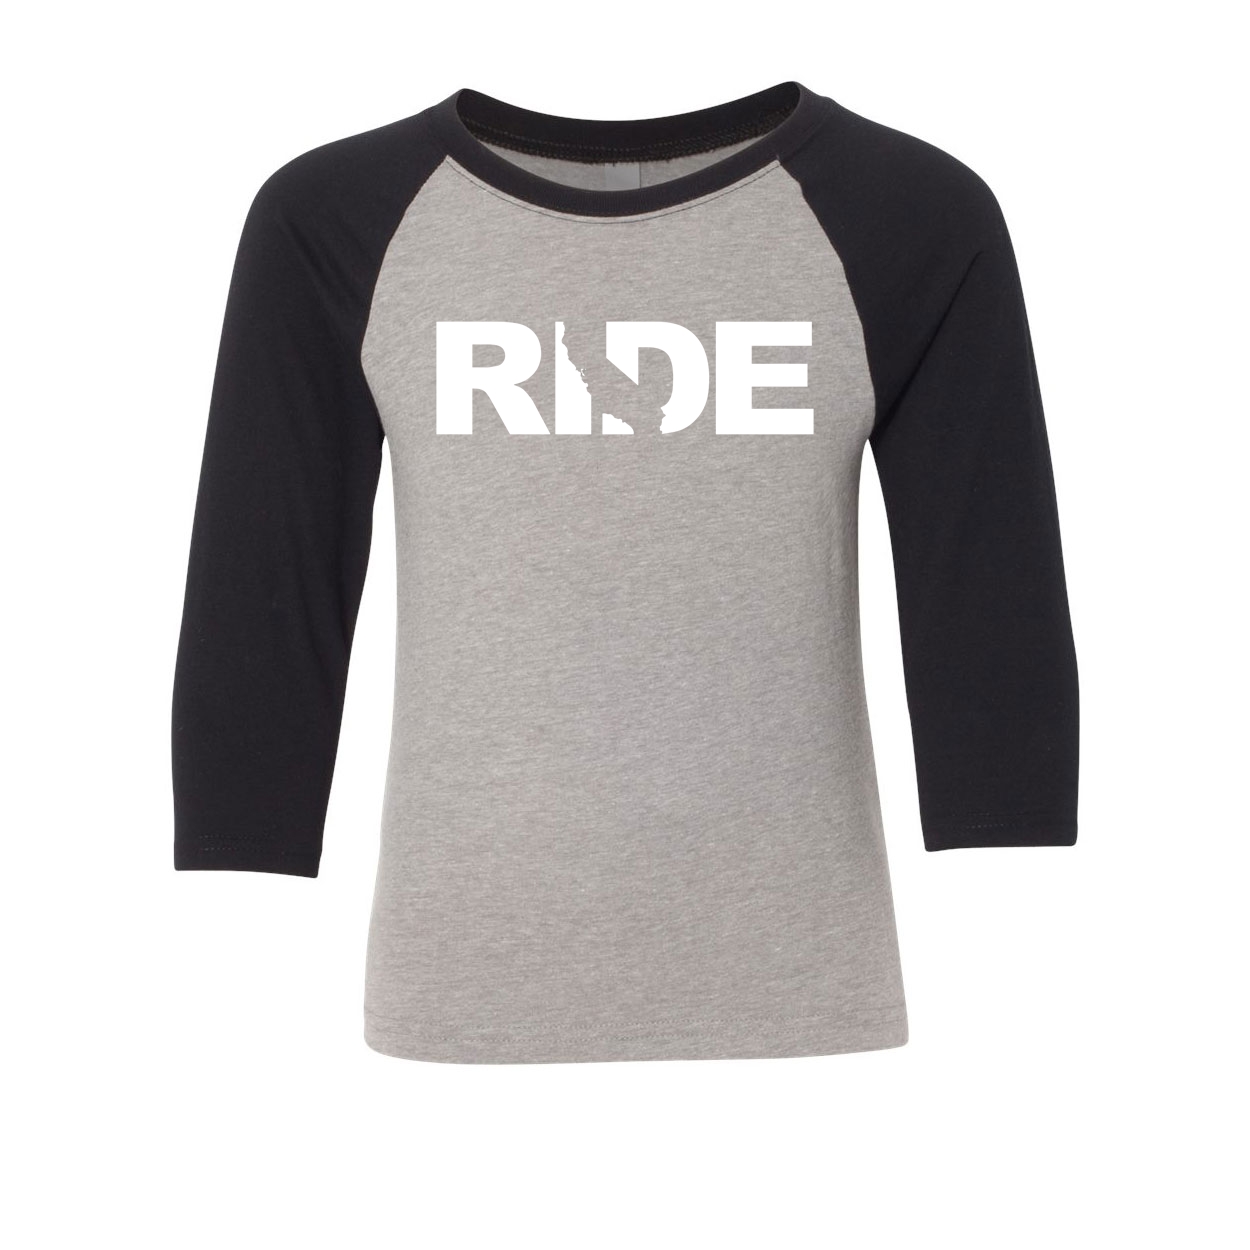 Ride California Classic Youth Premium Raglan Shirt Gray/Black (White Logo)